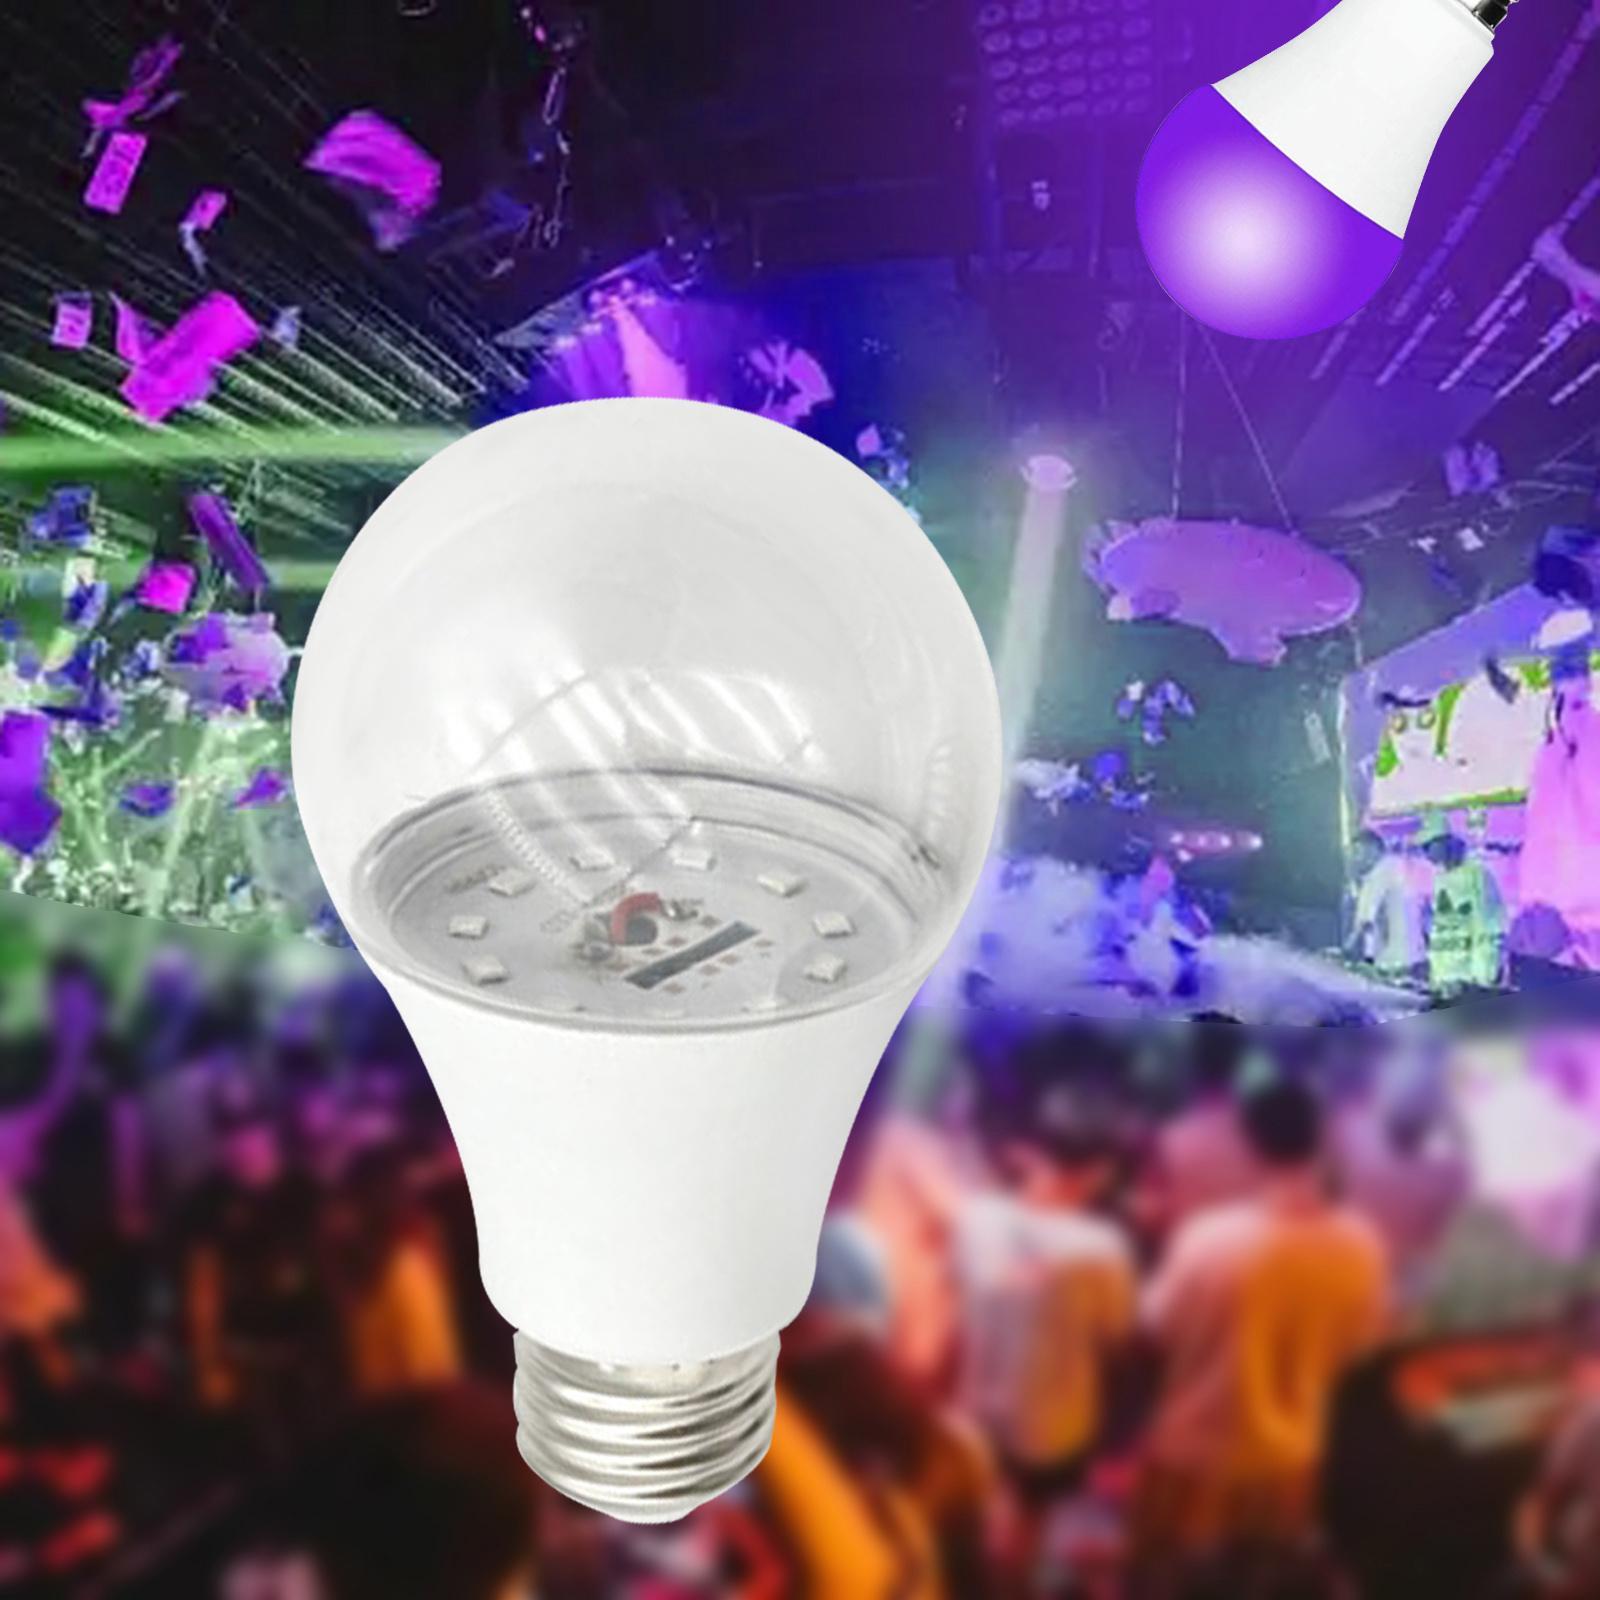 Hình ảnh Light Bulbs Violet Ambient Light for Body A Party Supplies